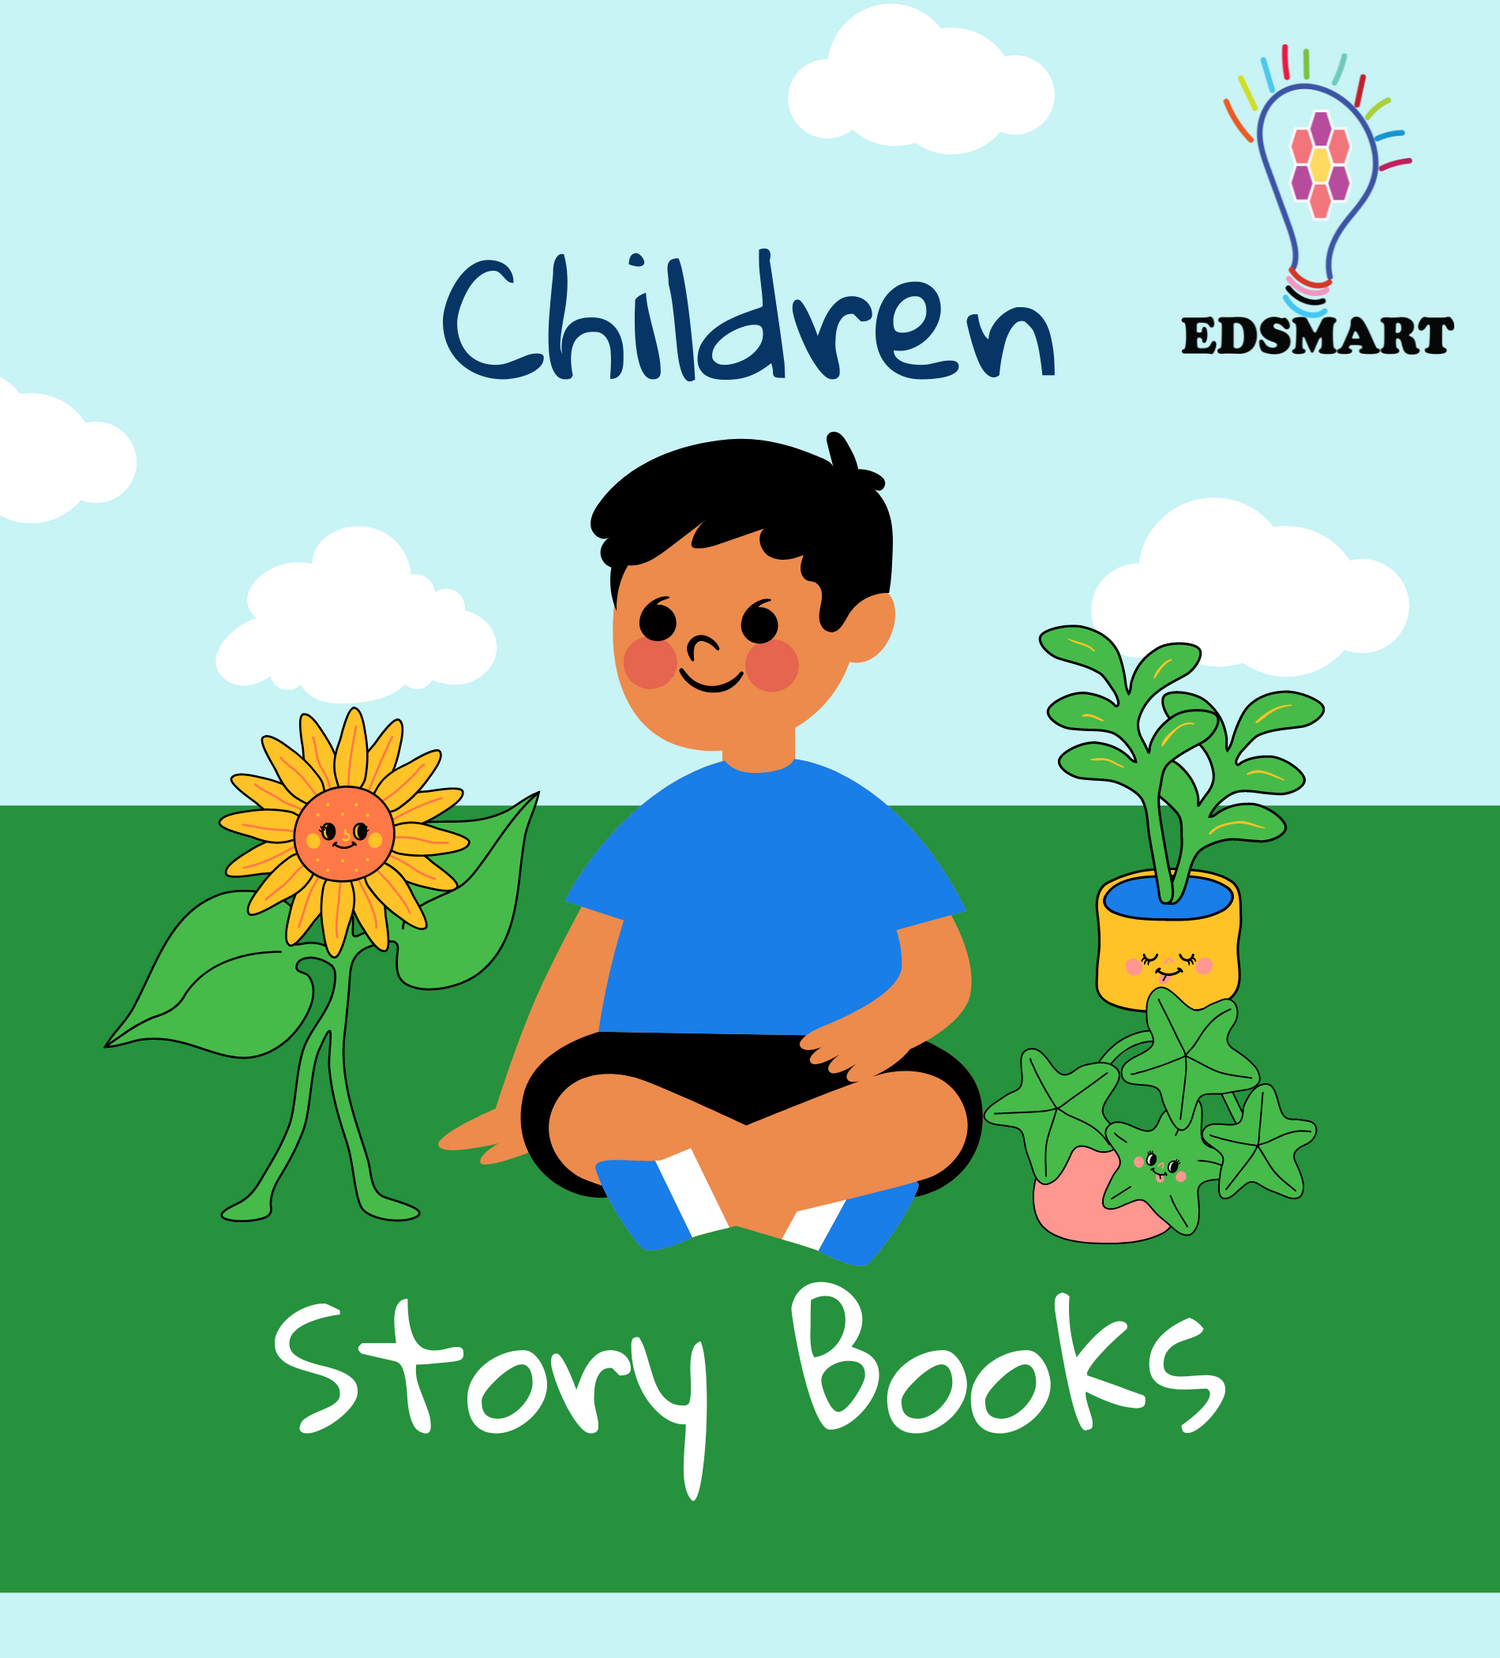 Children Story Books